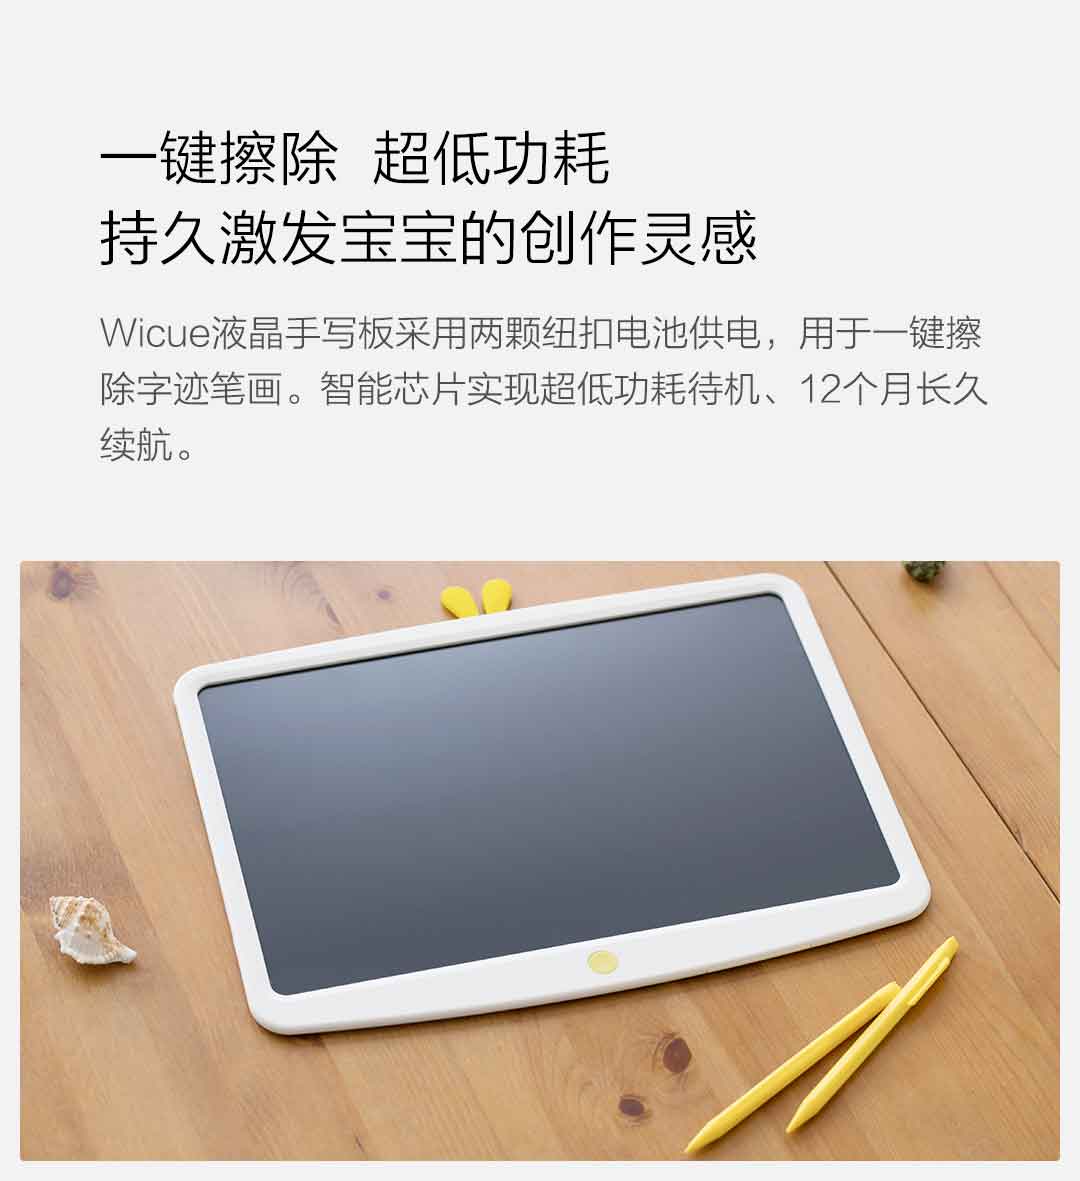 Xiaomi Wicue 12 Multicolor